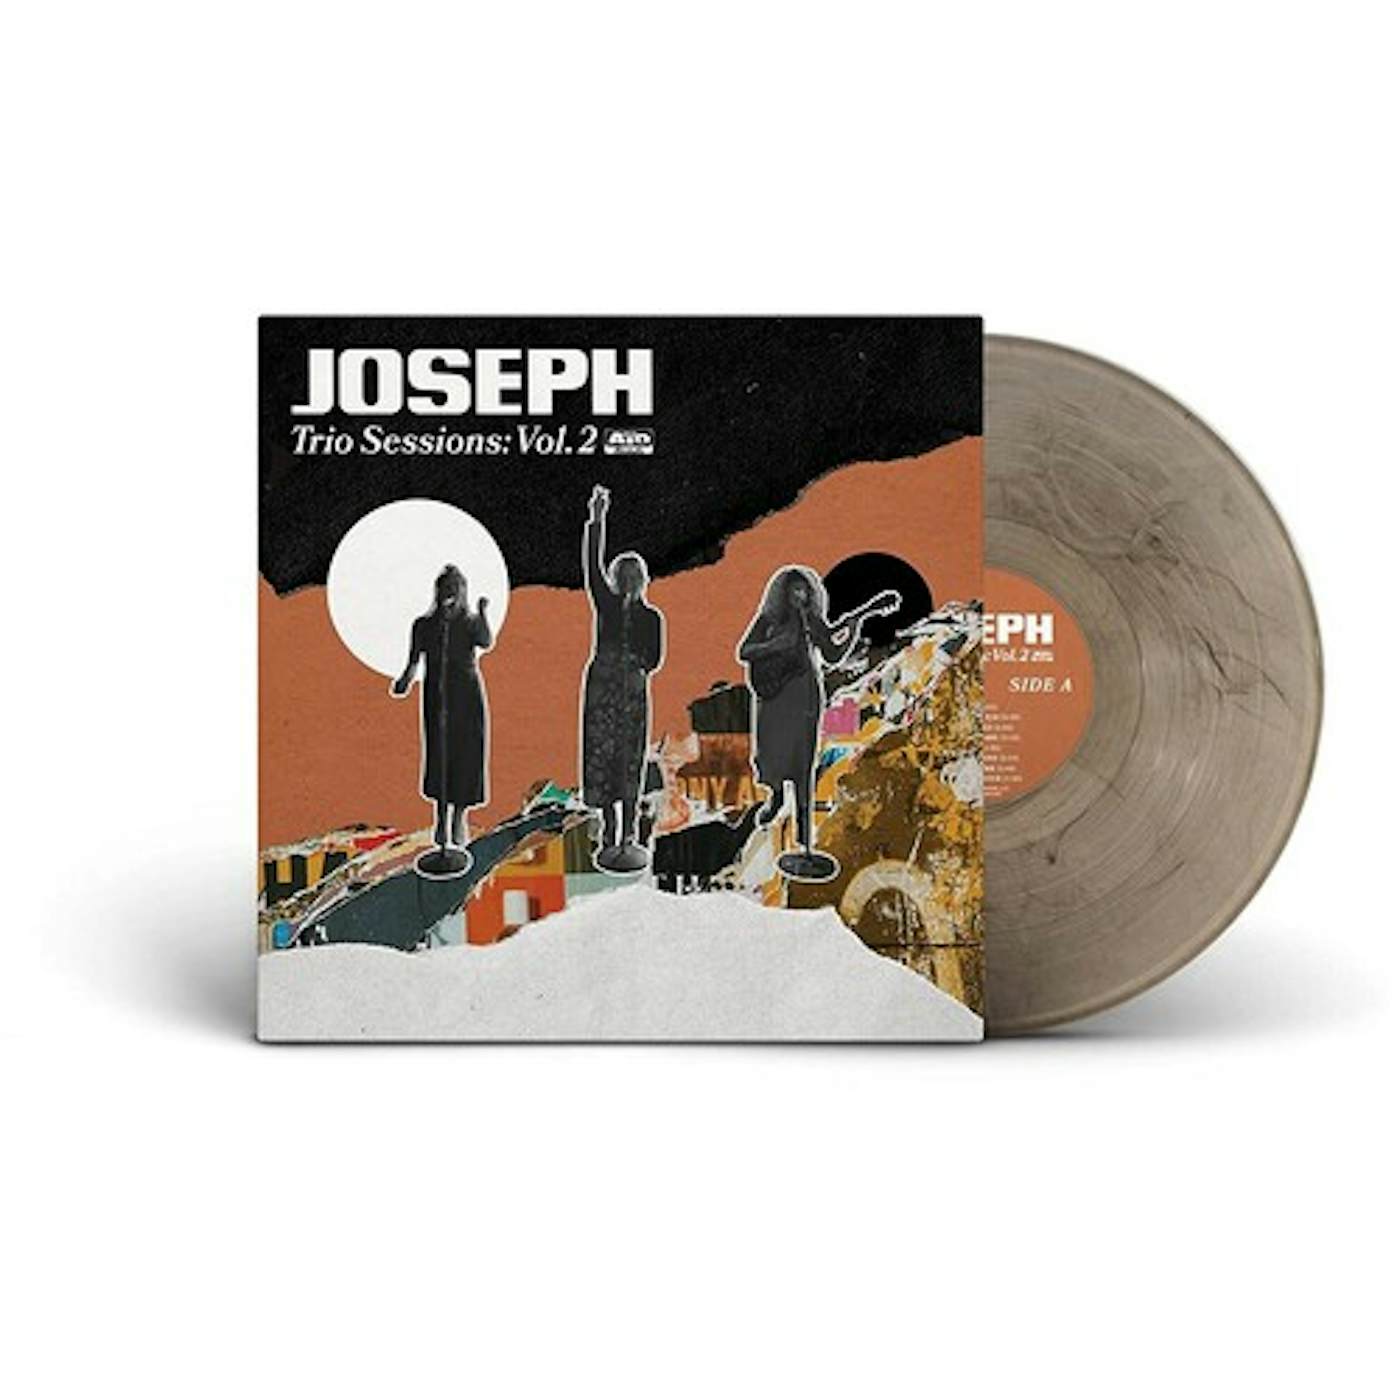 JOSEPH TRIO SESSIONS VOL 2 Vinyl Record